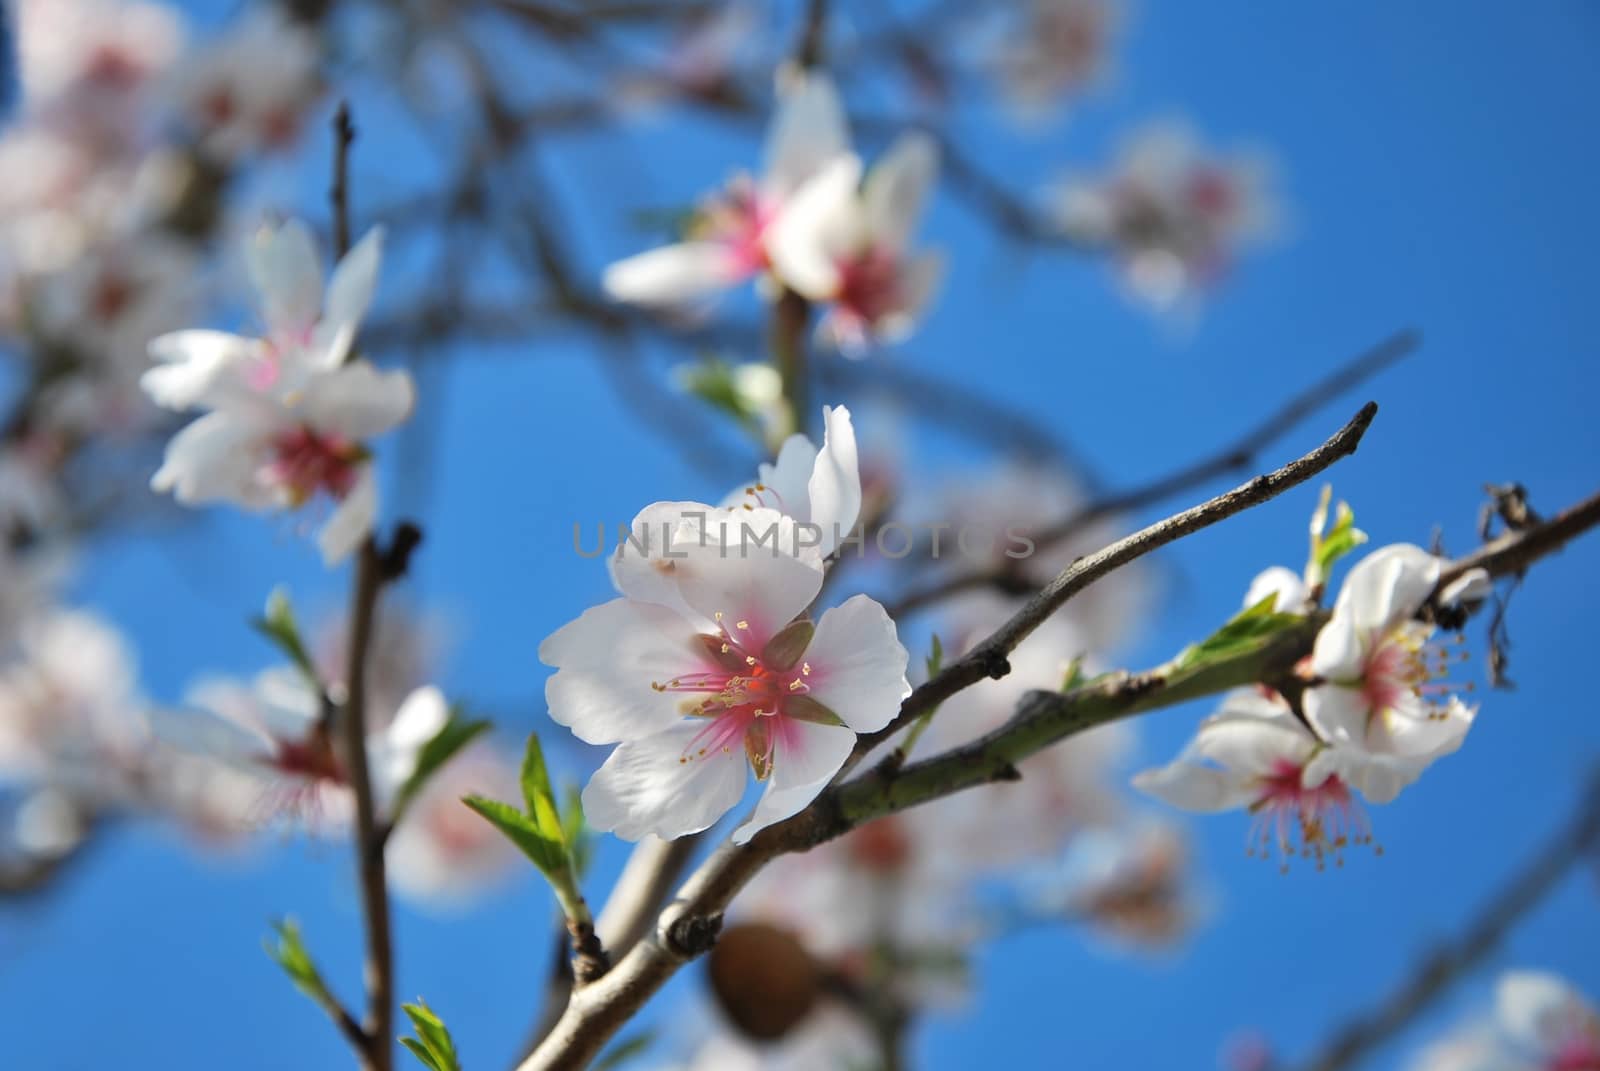 Cherry blossoms on blue sky background by NeydtStock